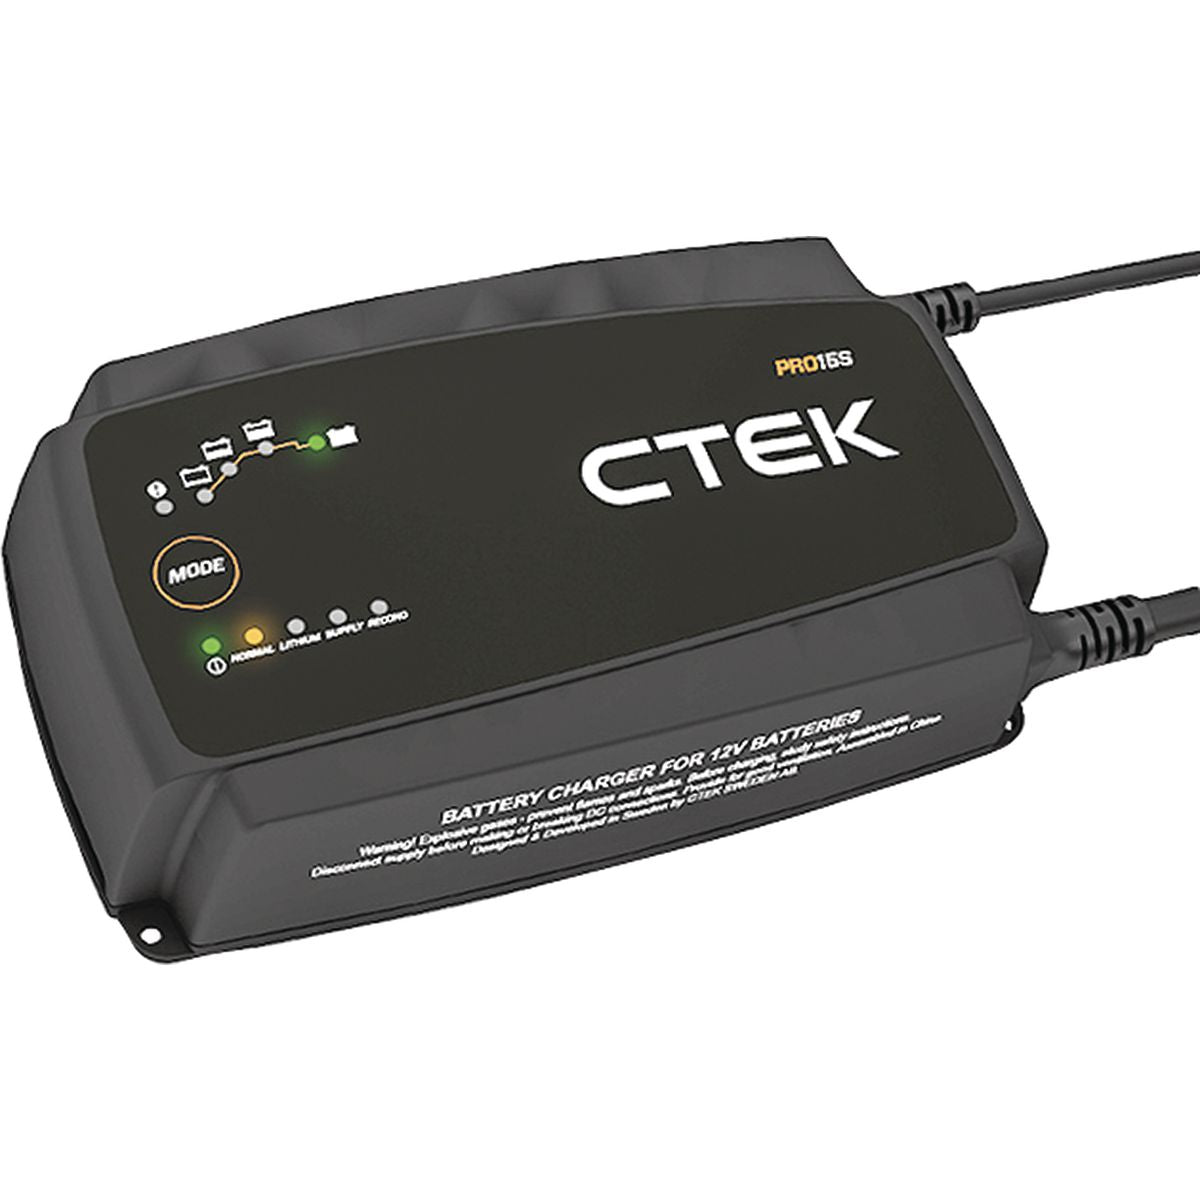 CTEK MXS5.0 12V 5A 8 Stage Battery Charger - 56-987